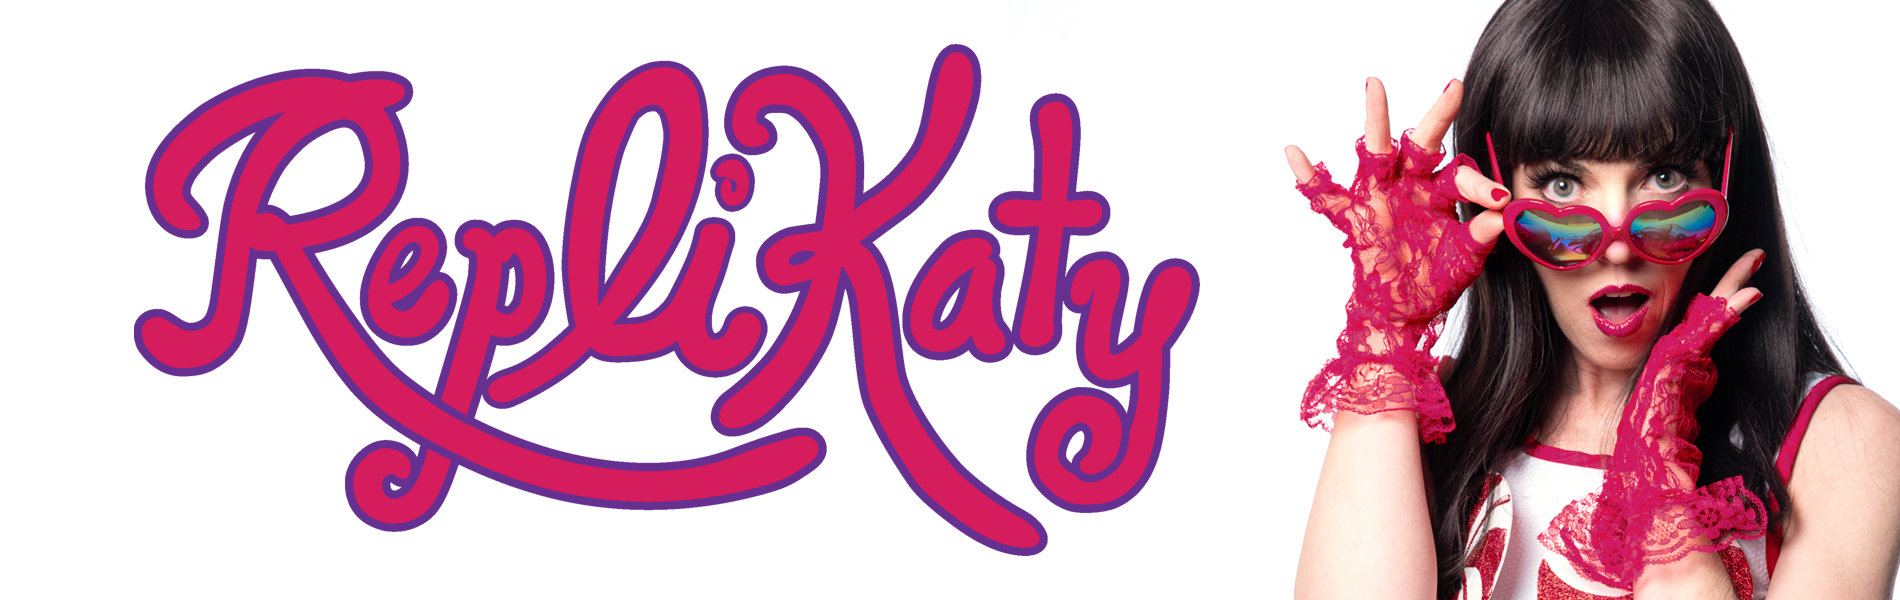 RepliKaty - The Katy Perry Tribute